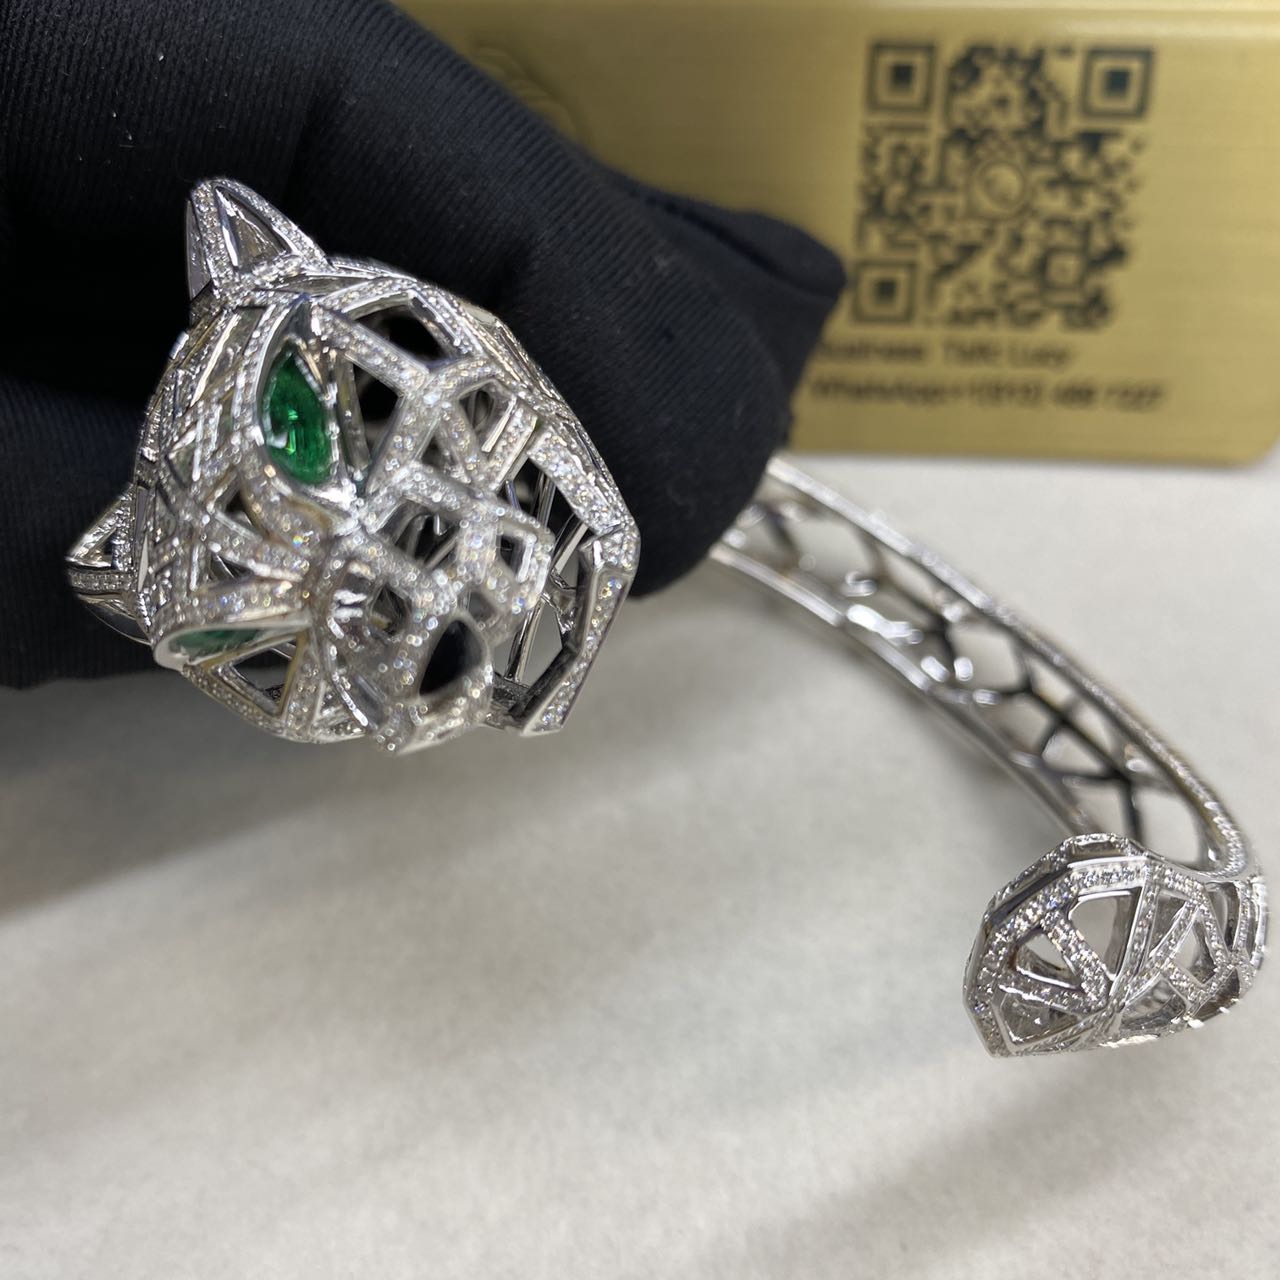 Panthere De Cartier 18K White Gold Diamond Emerald and Onyx Bracelet H6030217